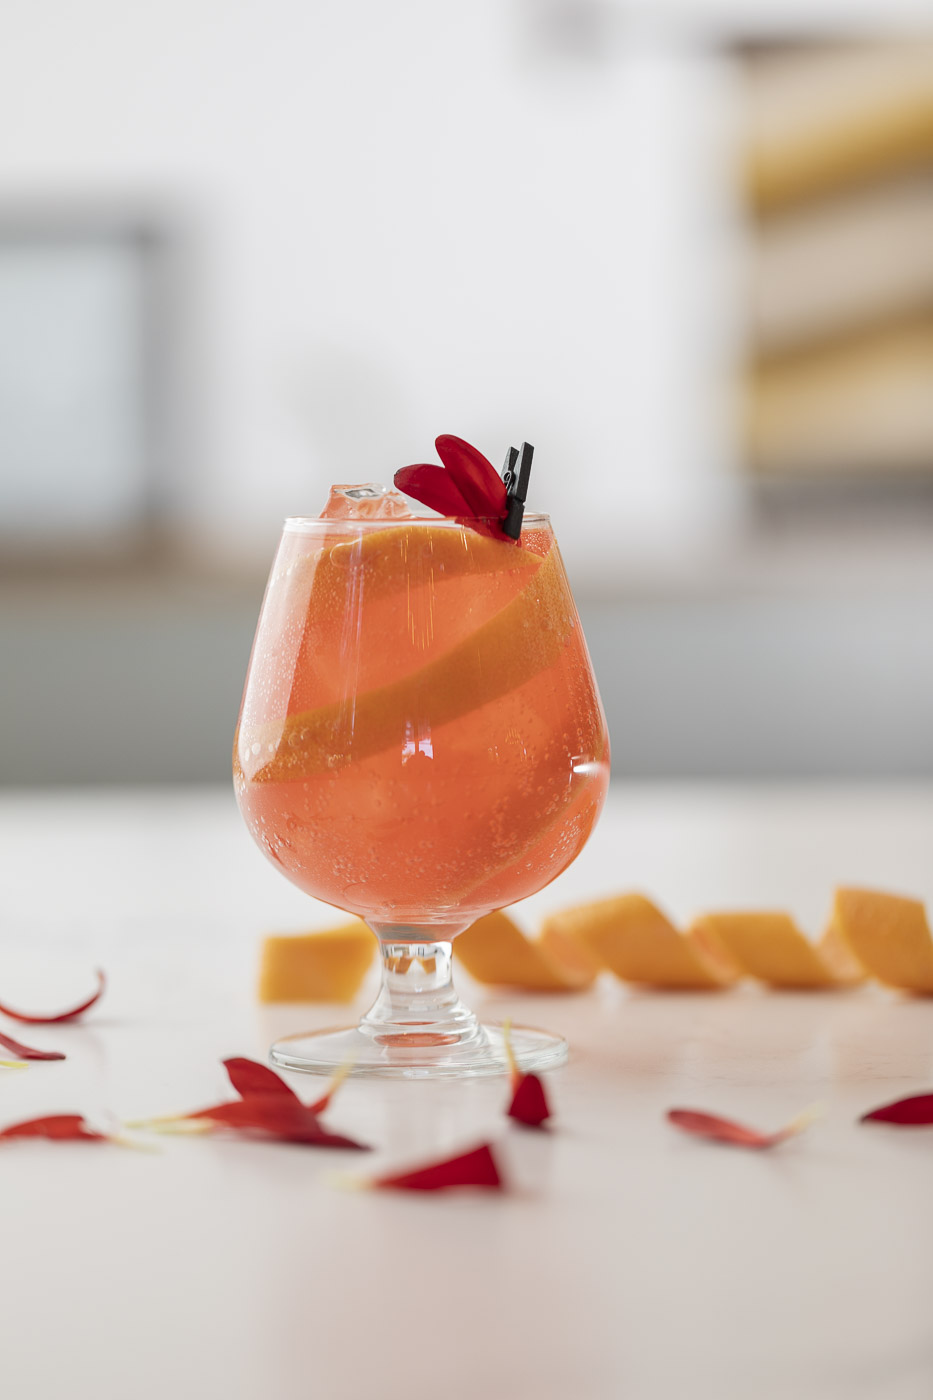 Bleeding Heart cocktail with grapefruit twist and red Gerbera petals garnish